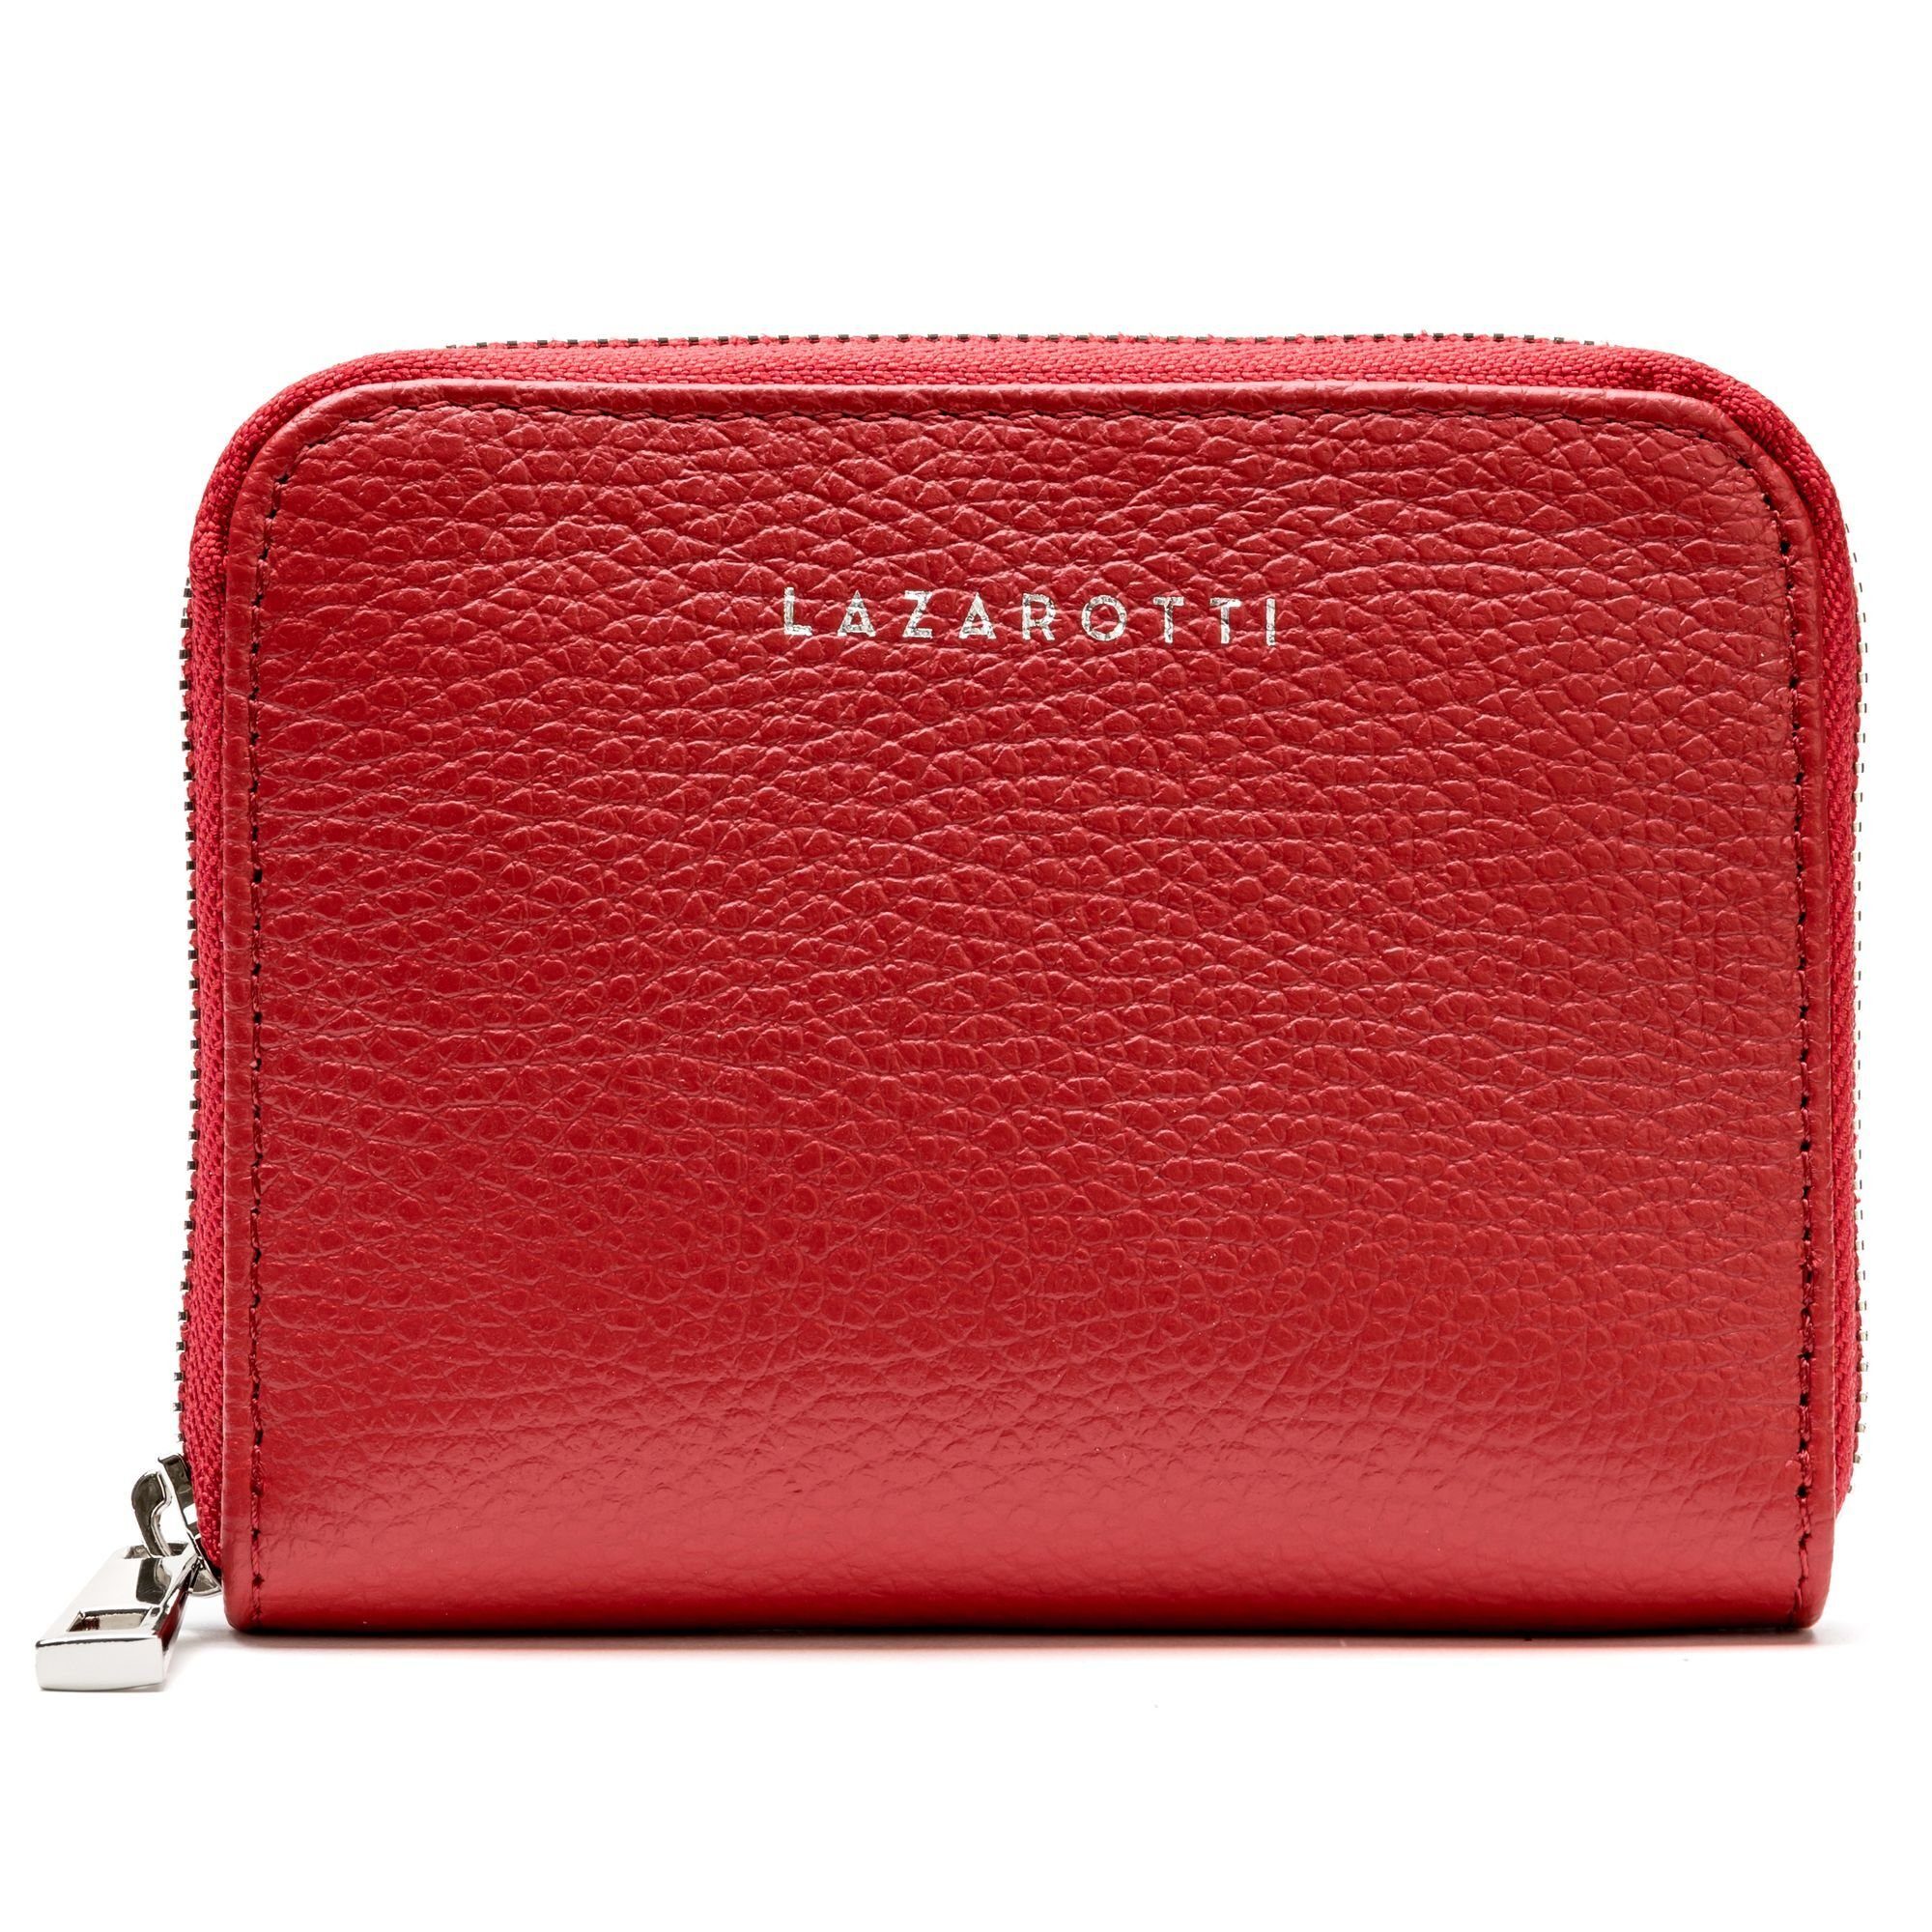 Lazarotti Geldbörse Milano Leather, Leder red